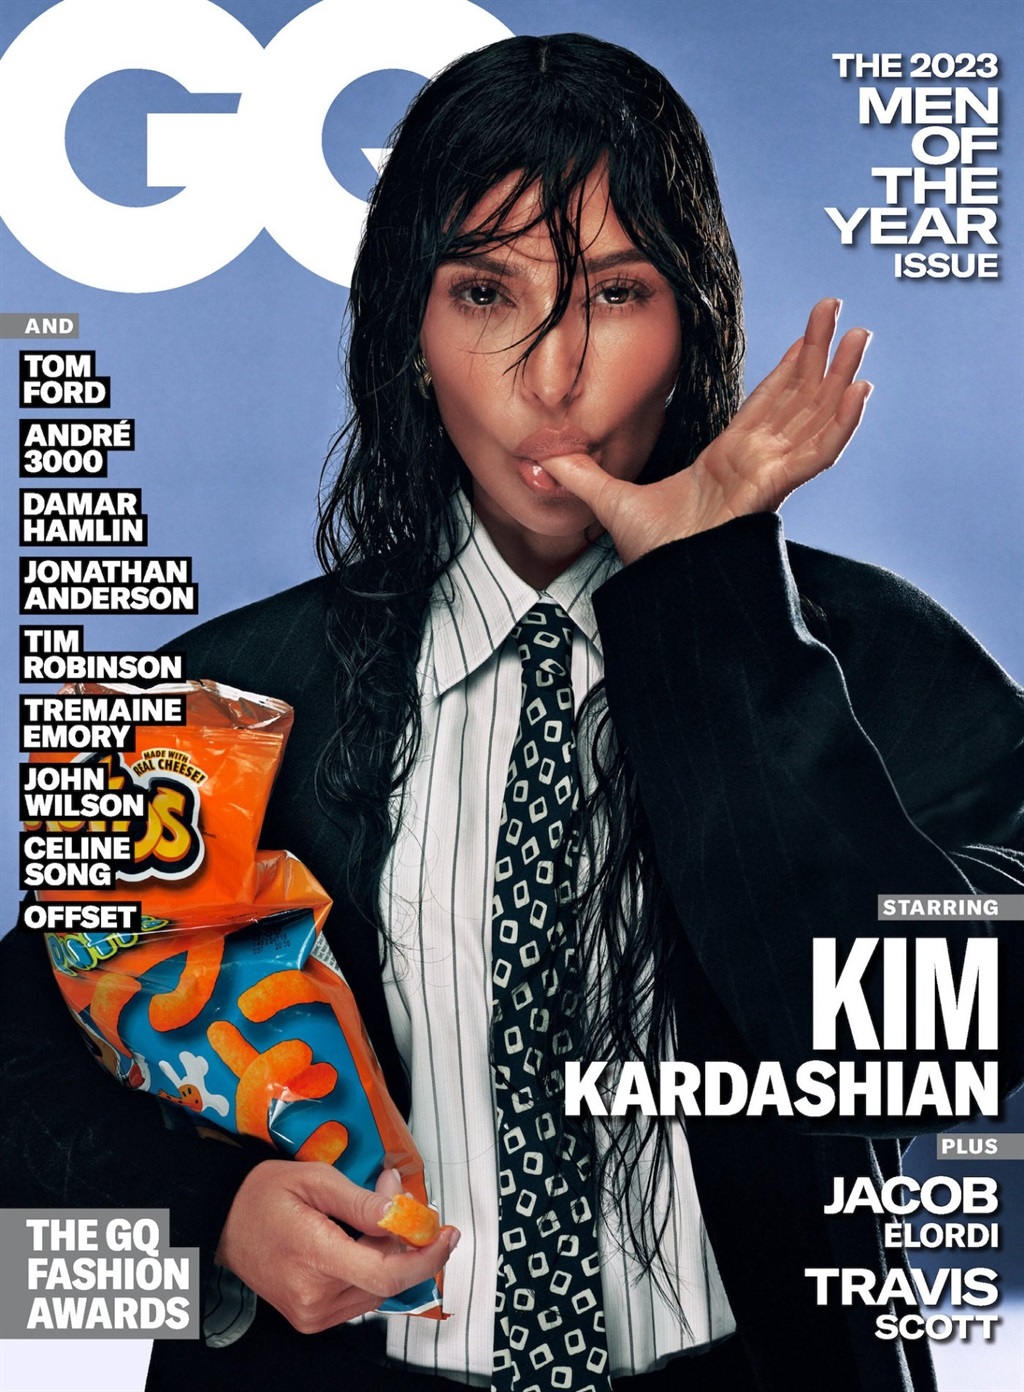 WATCH Kim Kardashian graces cover of GQ as Man of the Year City Press